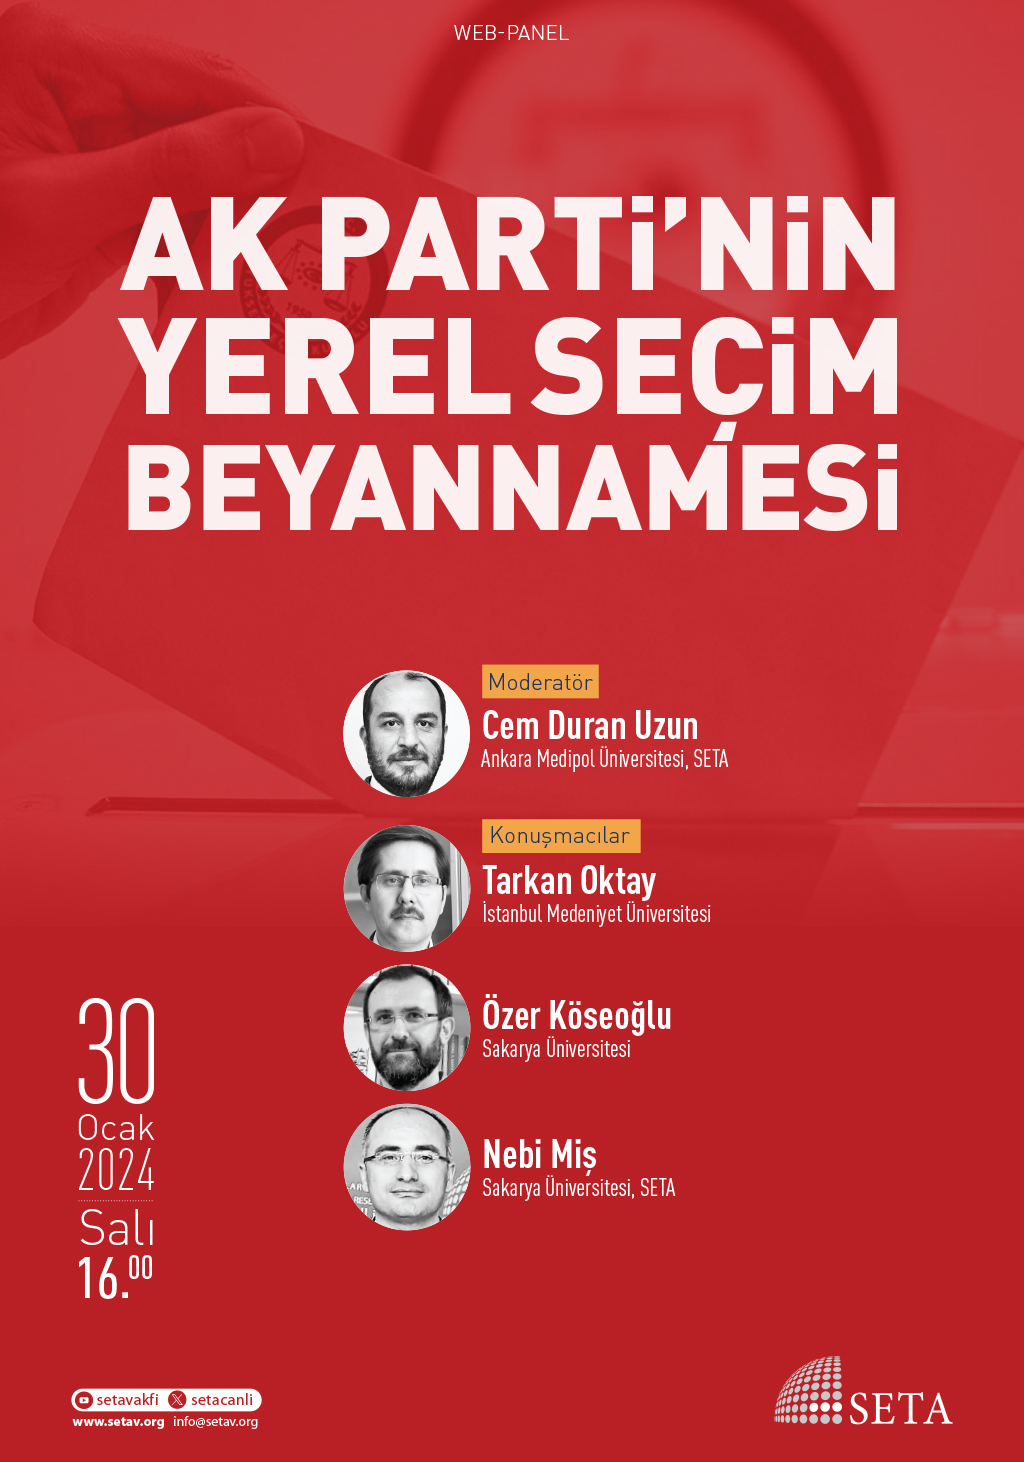 Web Panel: AK Parti’nin Yerel Seçim Beyannamesi